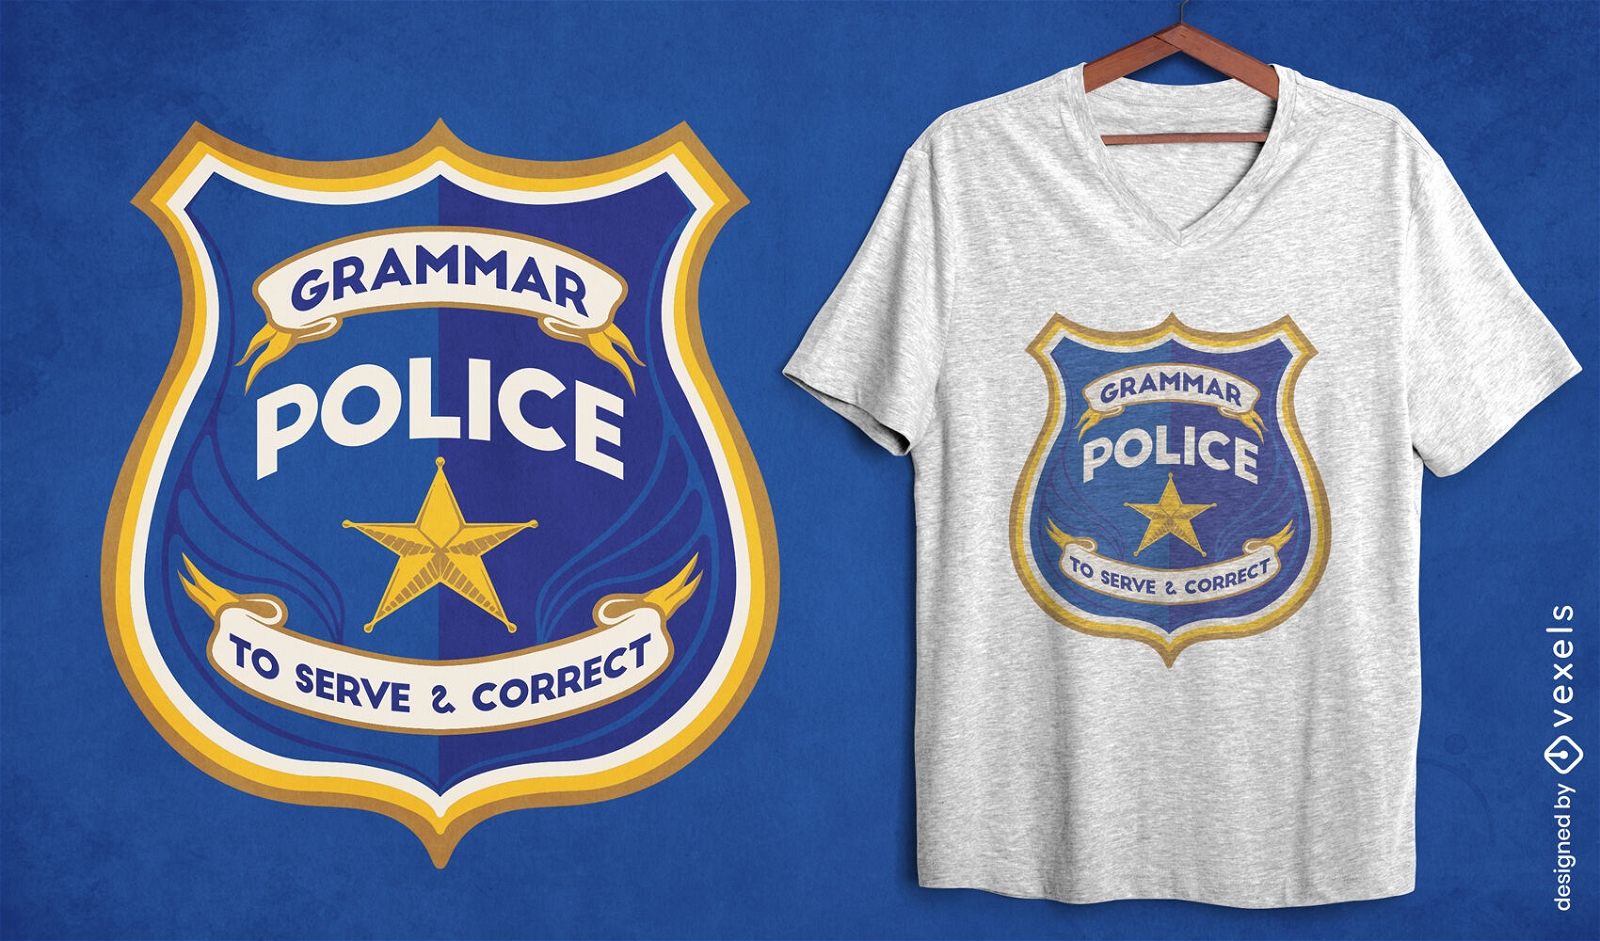 Grammar police official badge t-shirt design